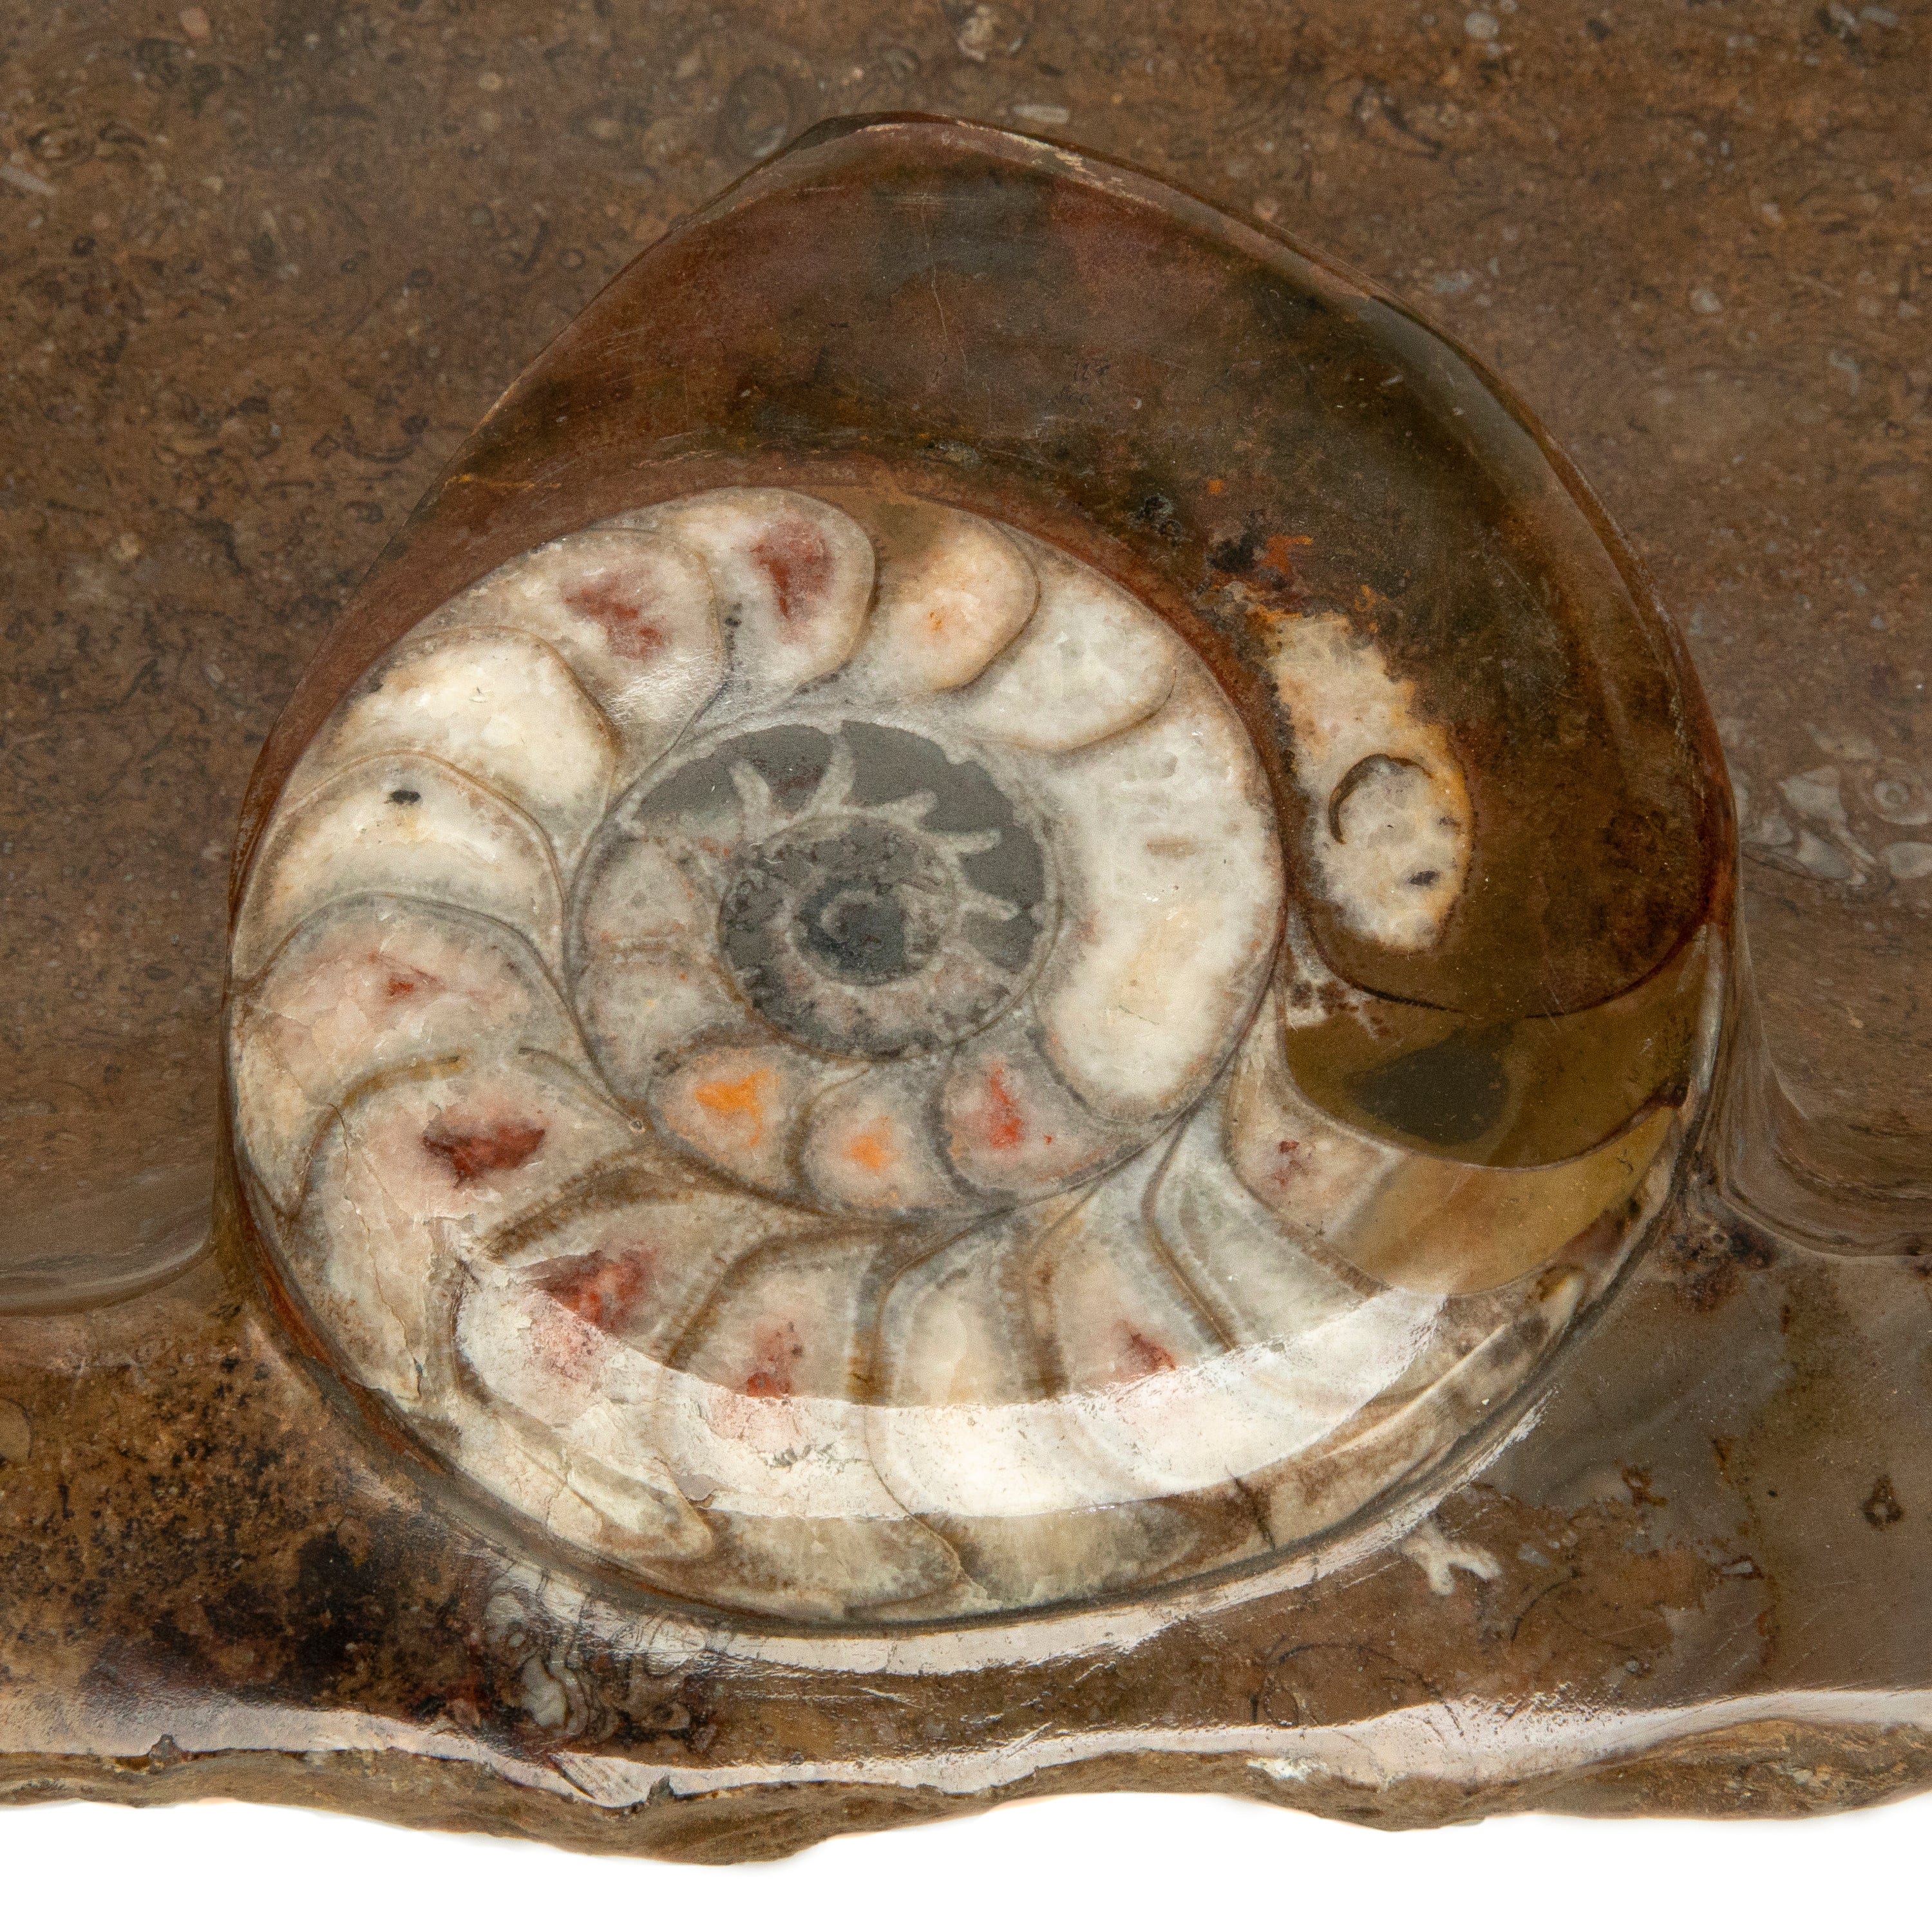 KALIFANO Ammonite Ammonite Fossil Sink Bowl from Morocco - 25" AMBOWL3200.003